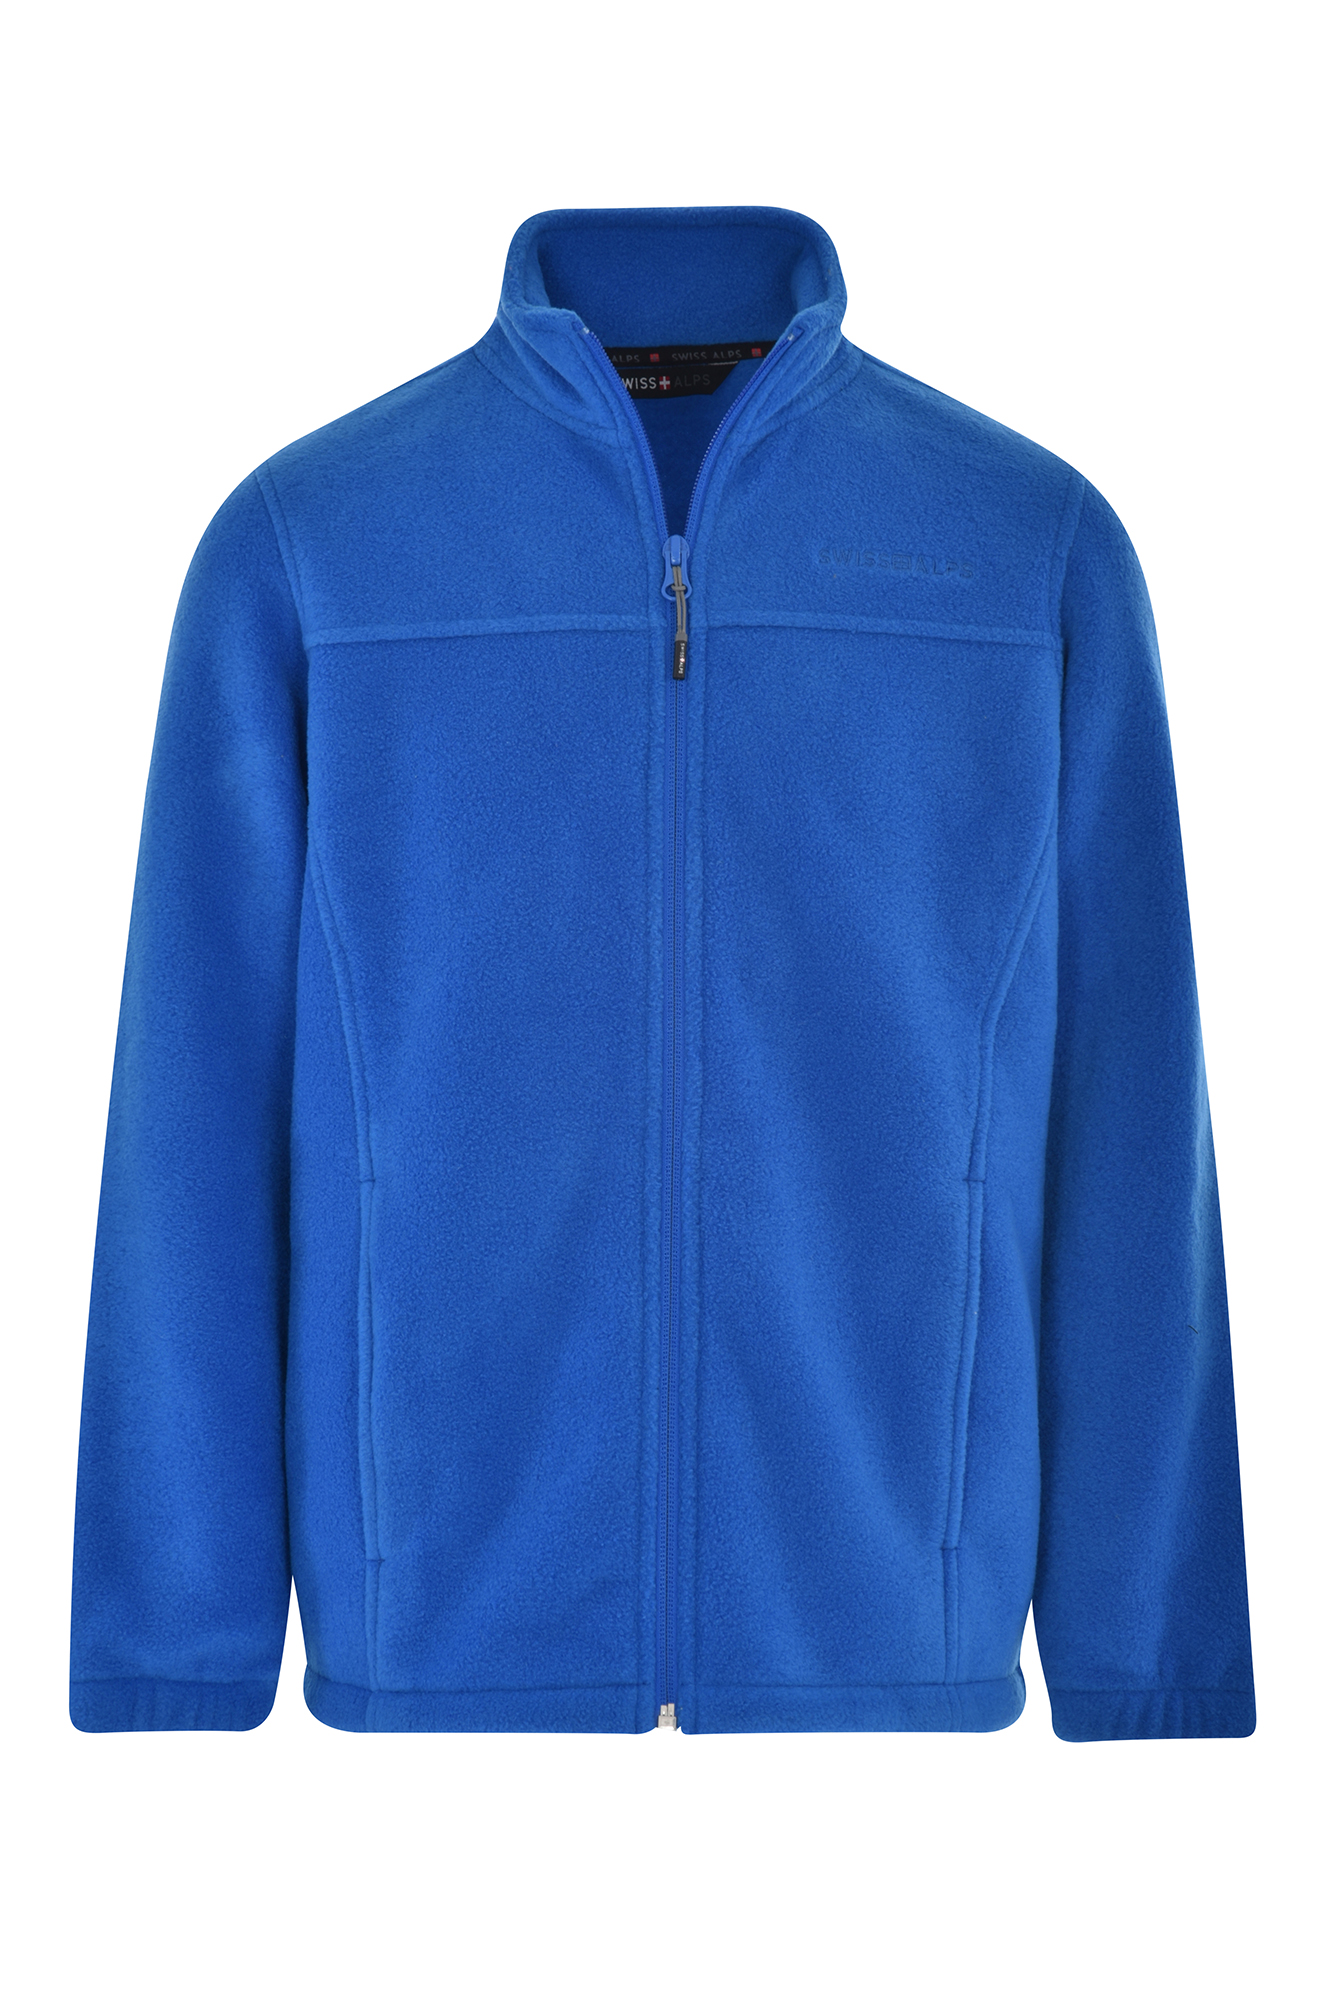 Swiss Alps Boy's Polar Fleece Full Zip Jacket - Size 8, Blue - Walmart.com